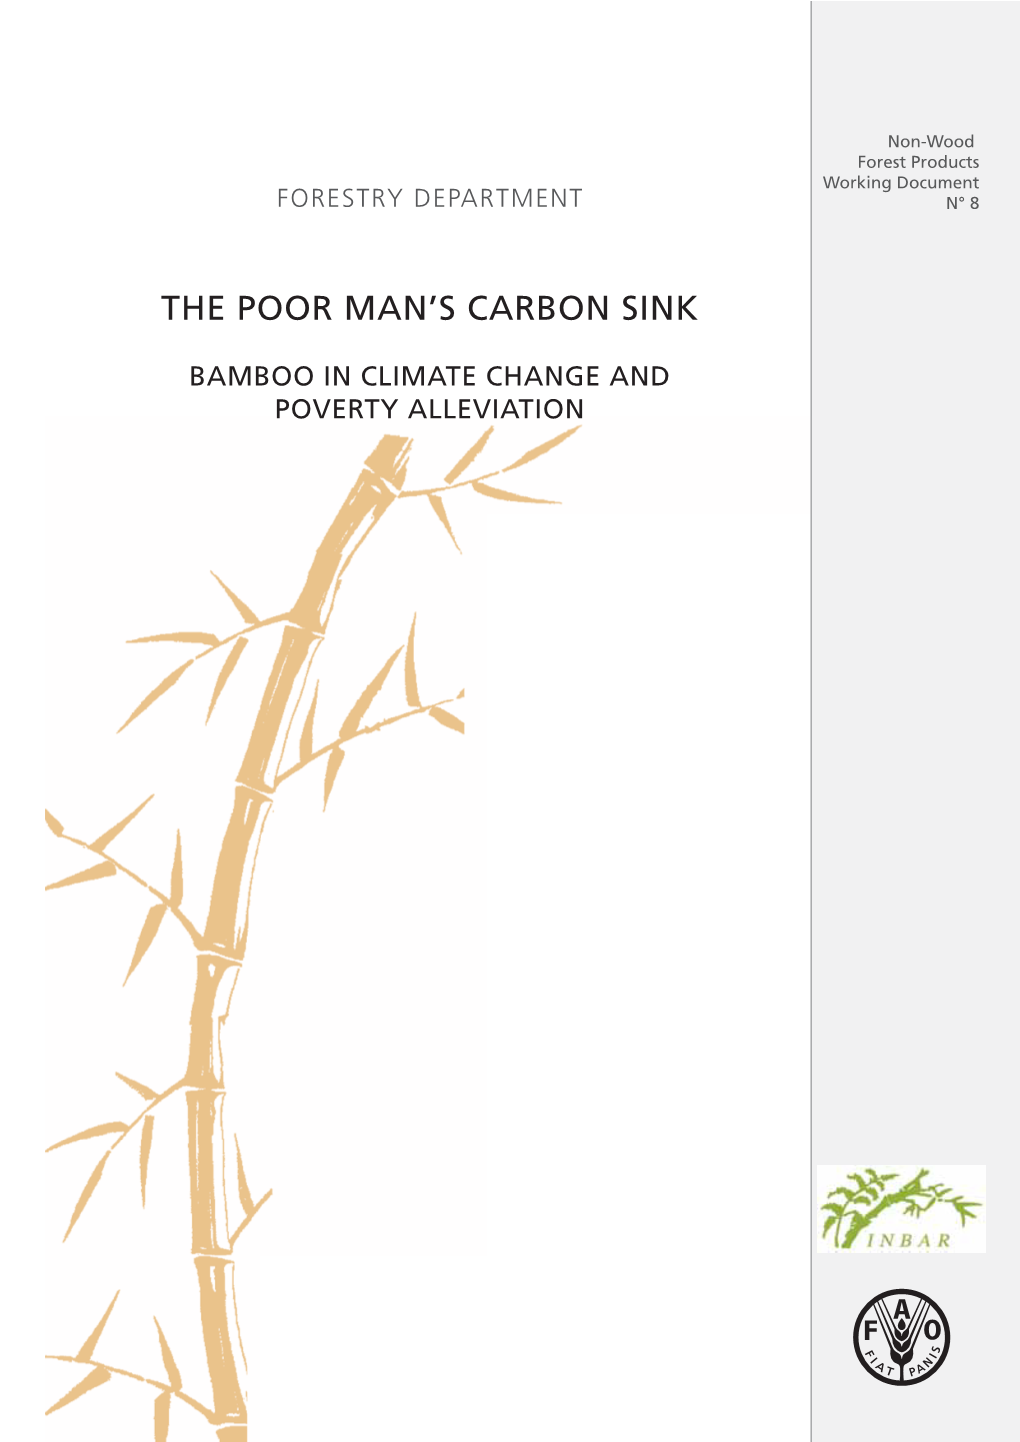 The Poor Man's Carbon Sink